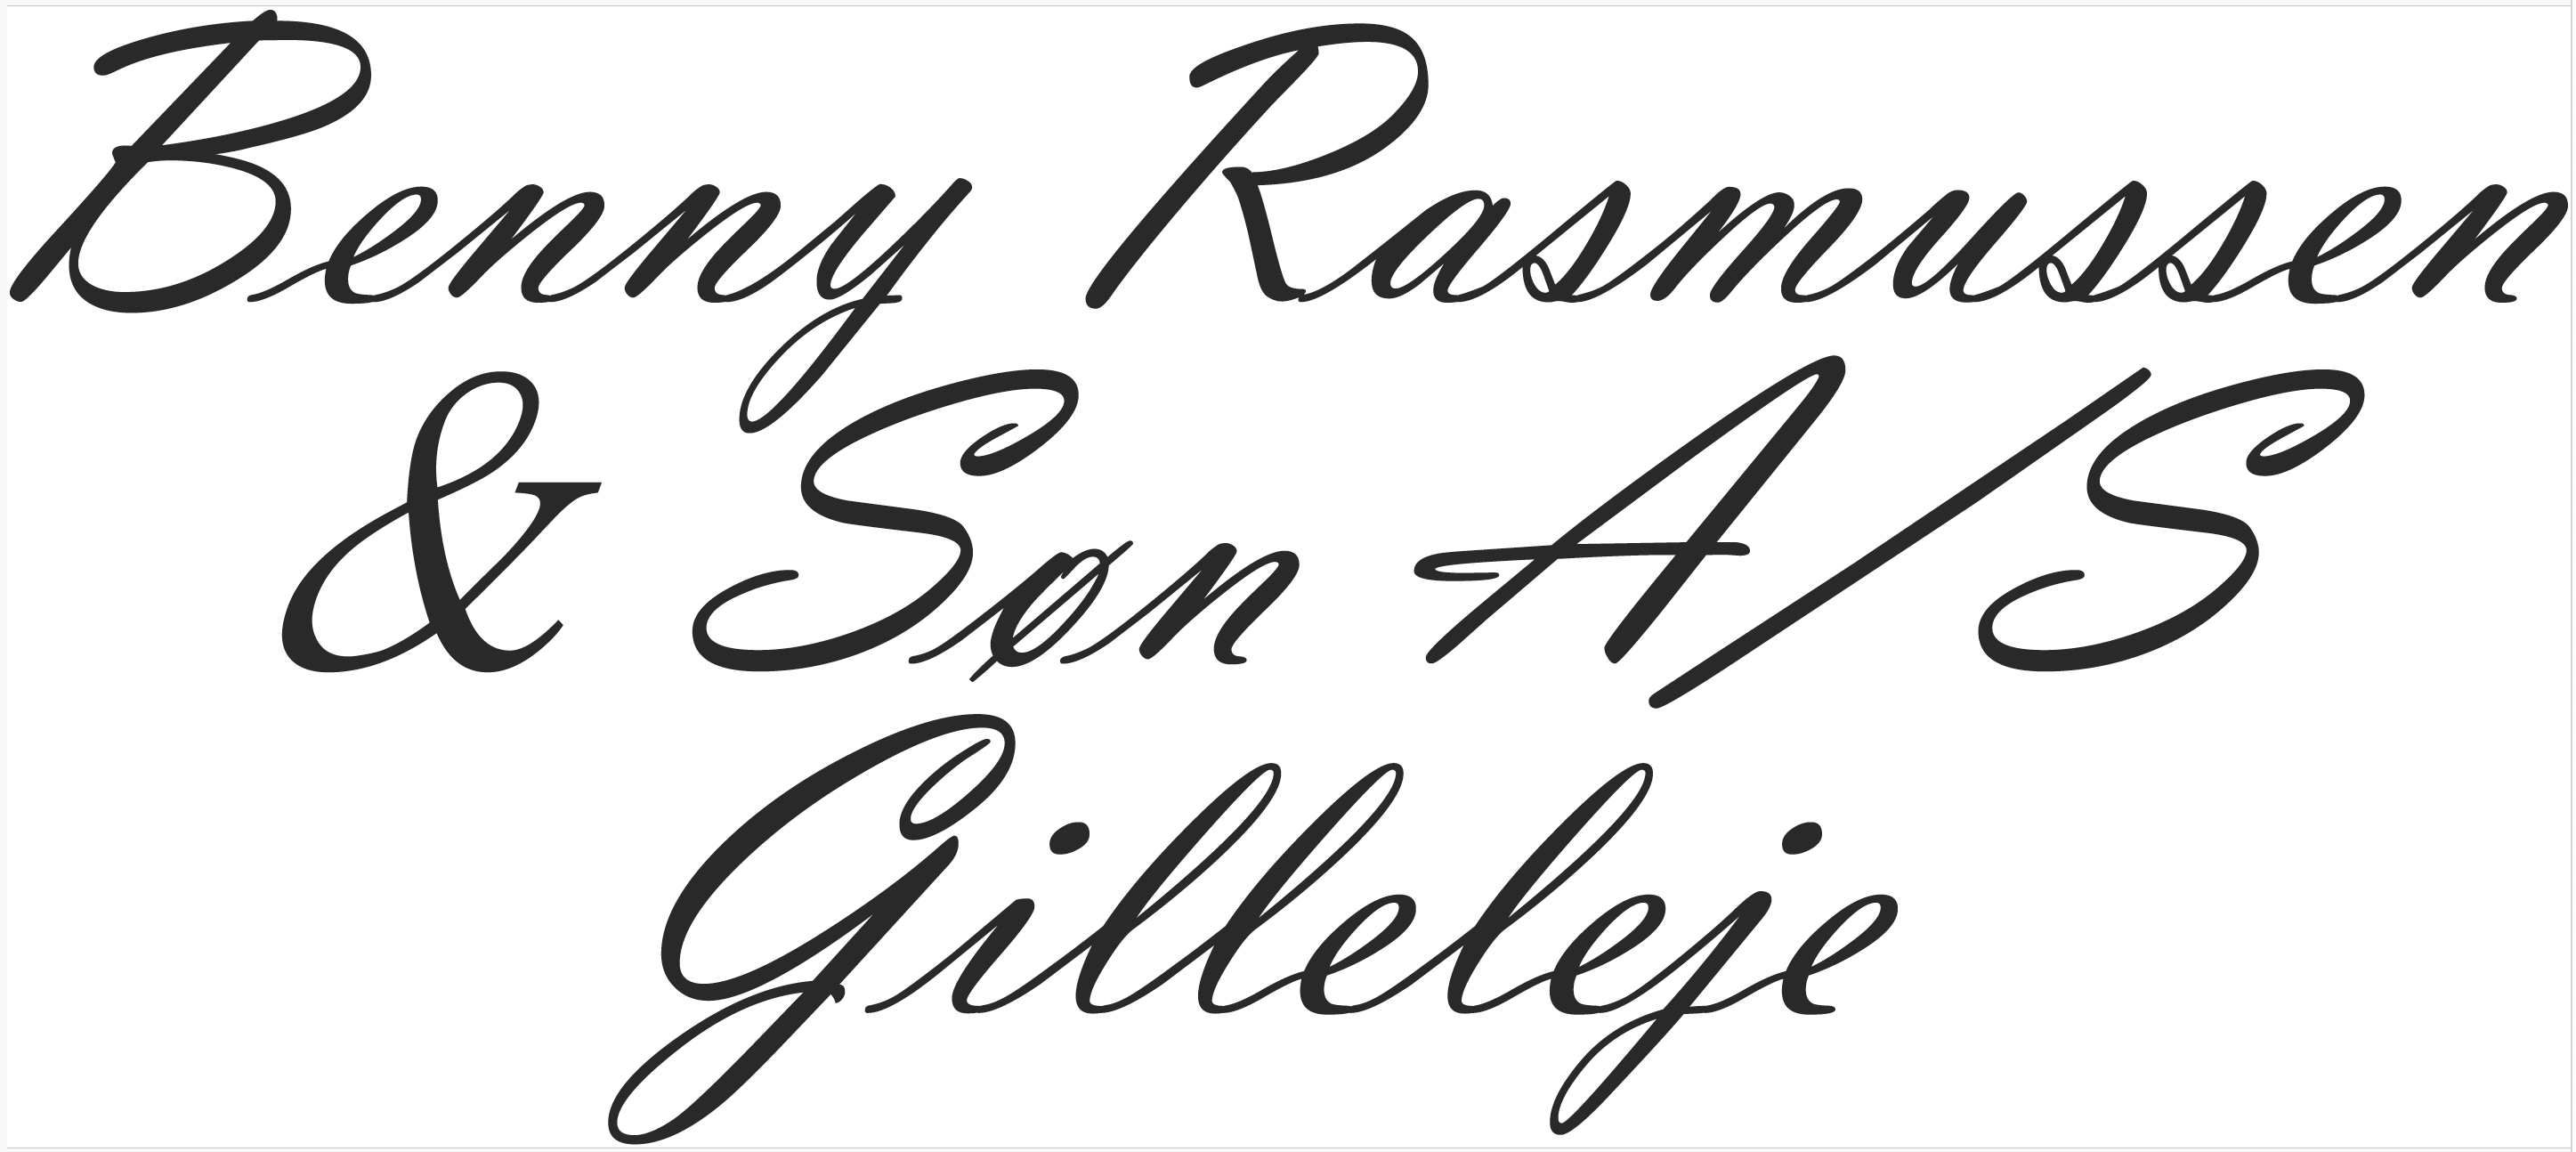 Benny Rasmussen - logo